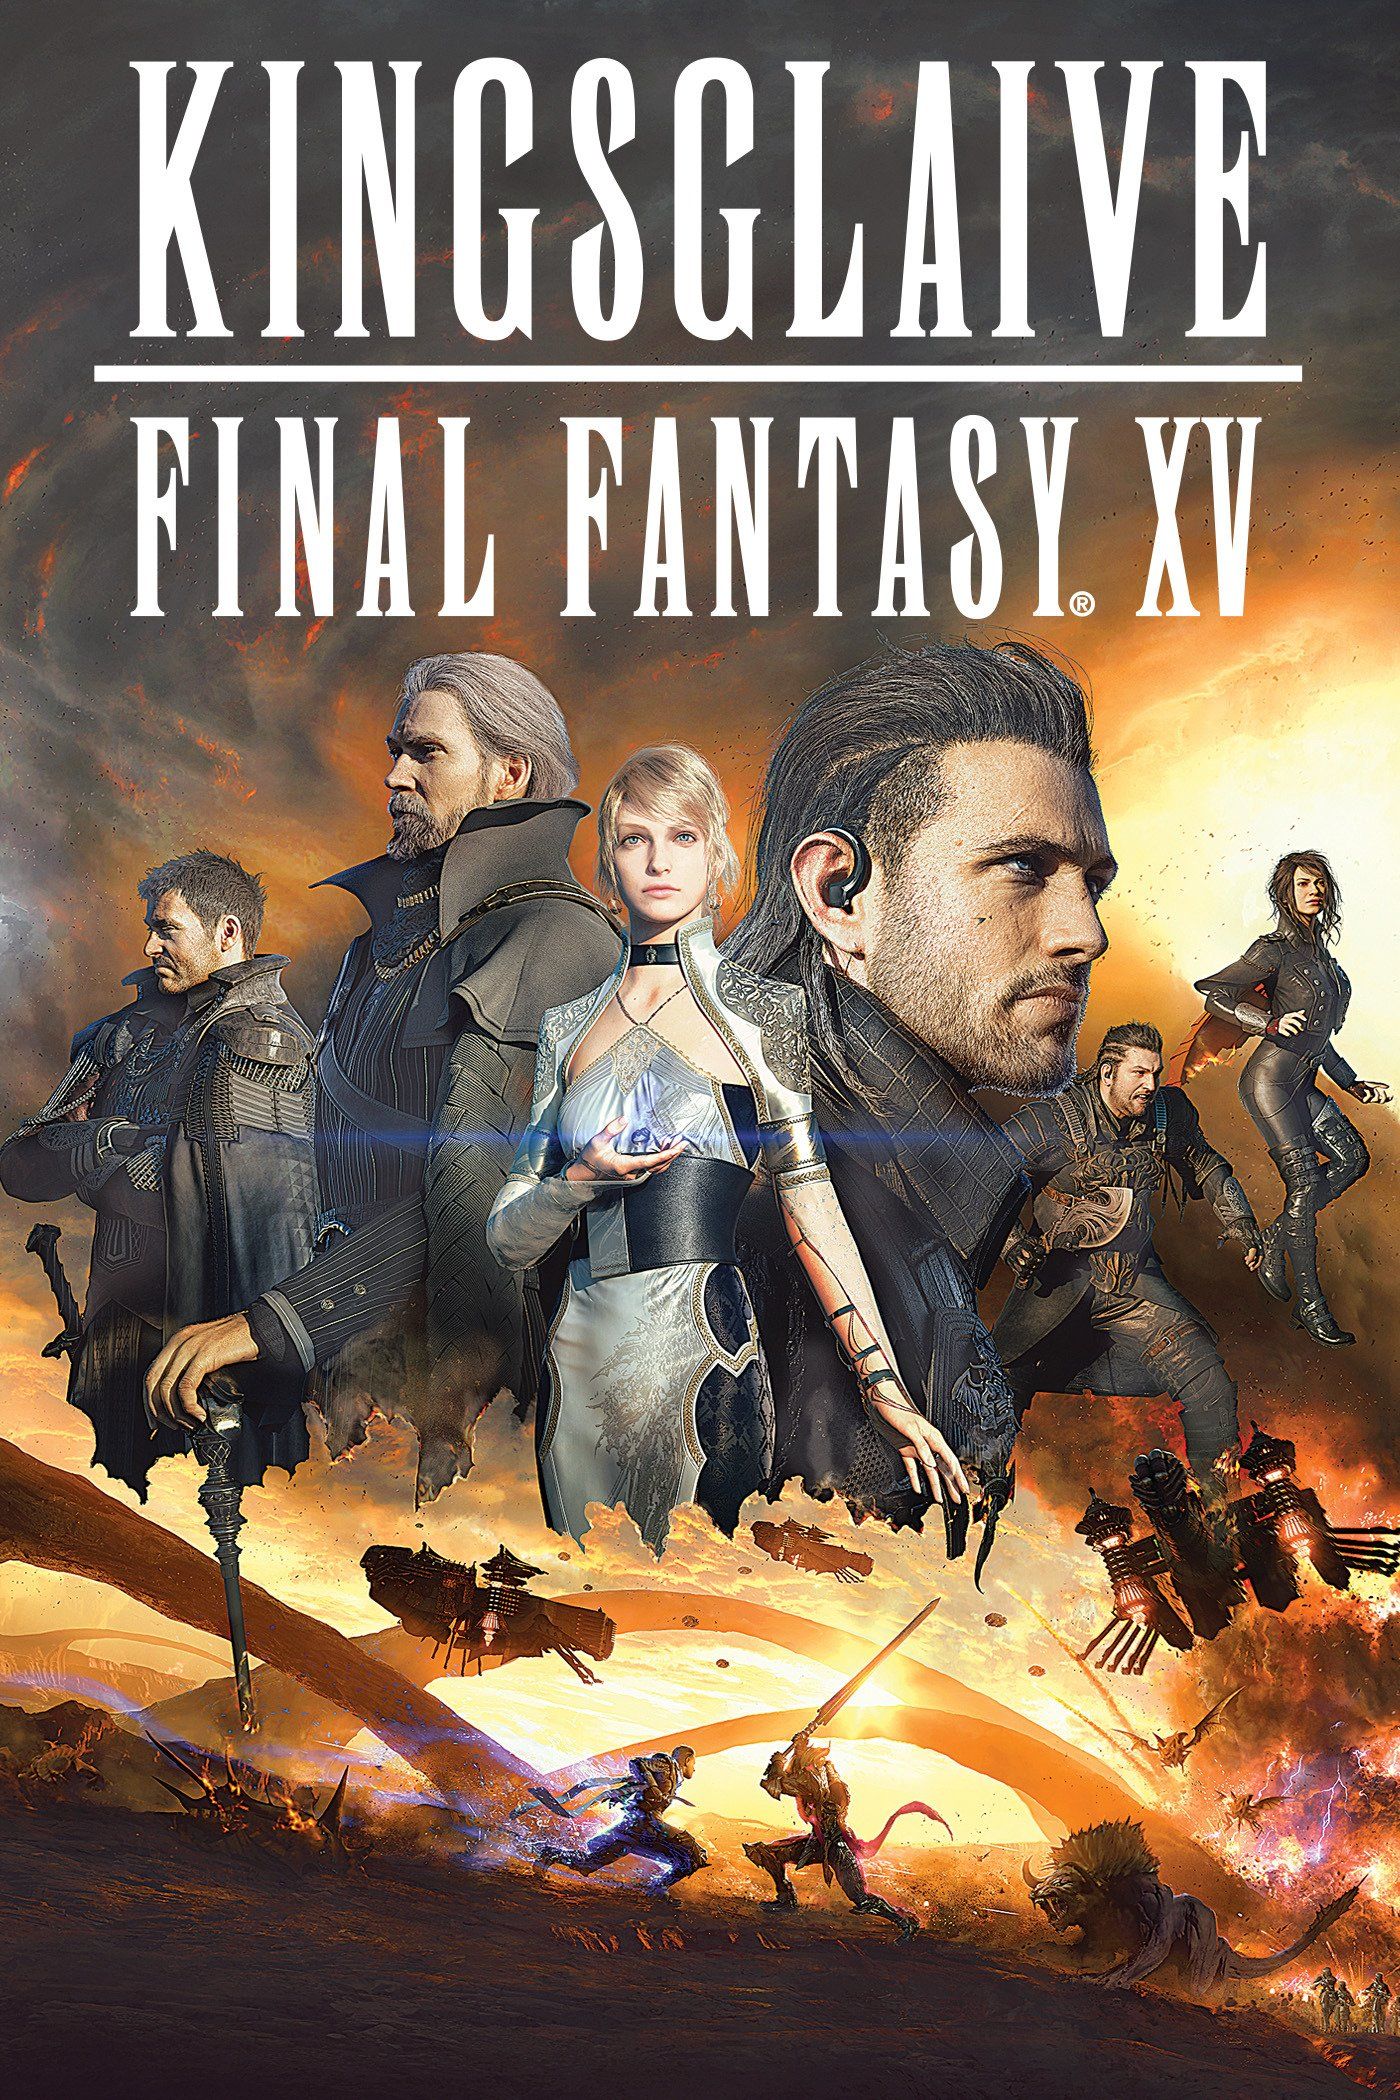 Kingsglaive: Final Fantasy XV: Sean Bean, Aaron Paul, Lena Headey, Takeshi Nozue